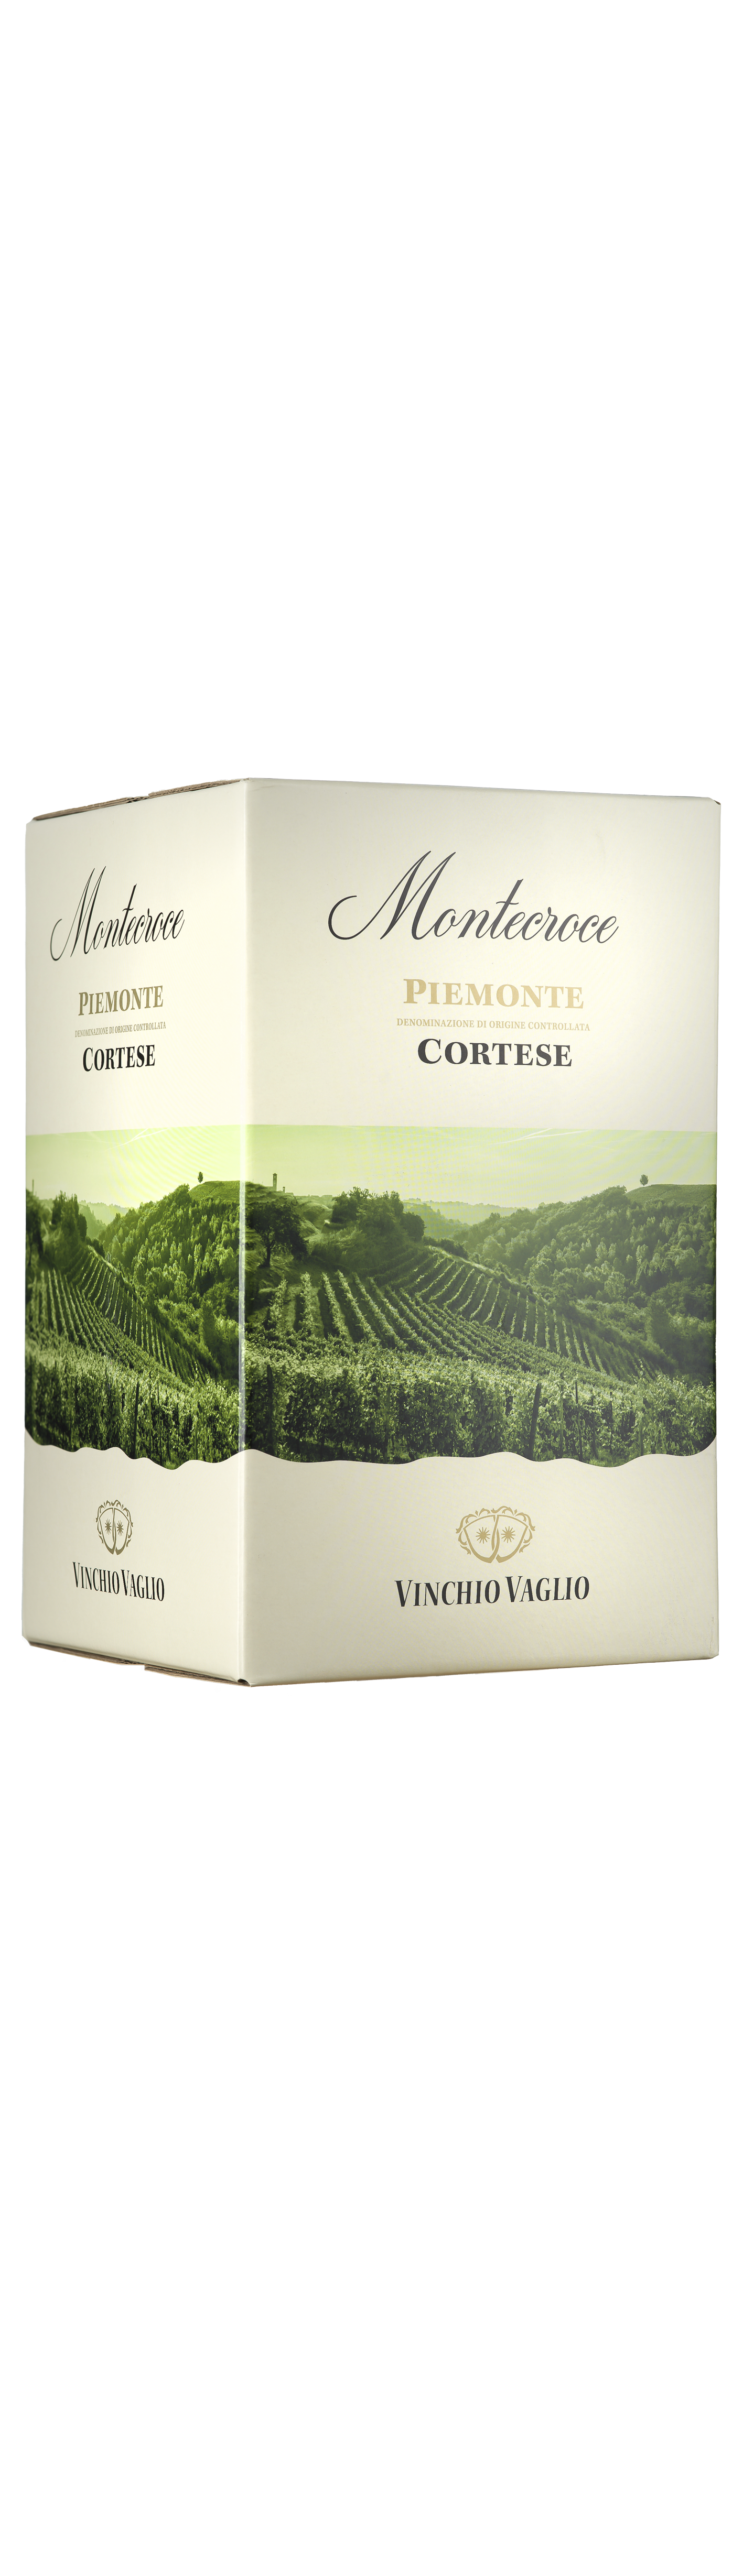 Bottle shot - Vinchio Vaglio, DOC Cortese, Montecroce, Piemonte, Italy (10 Litre BIB)